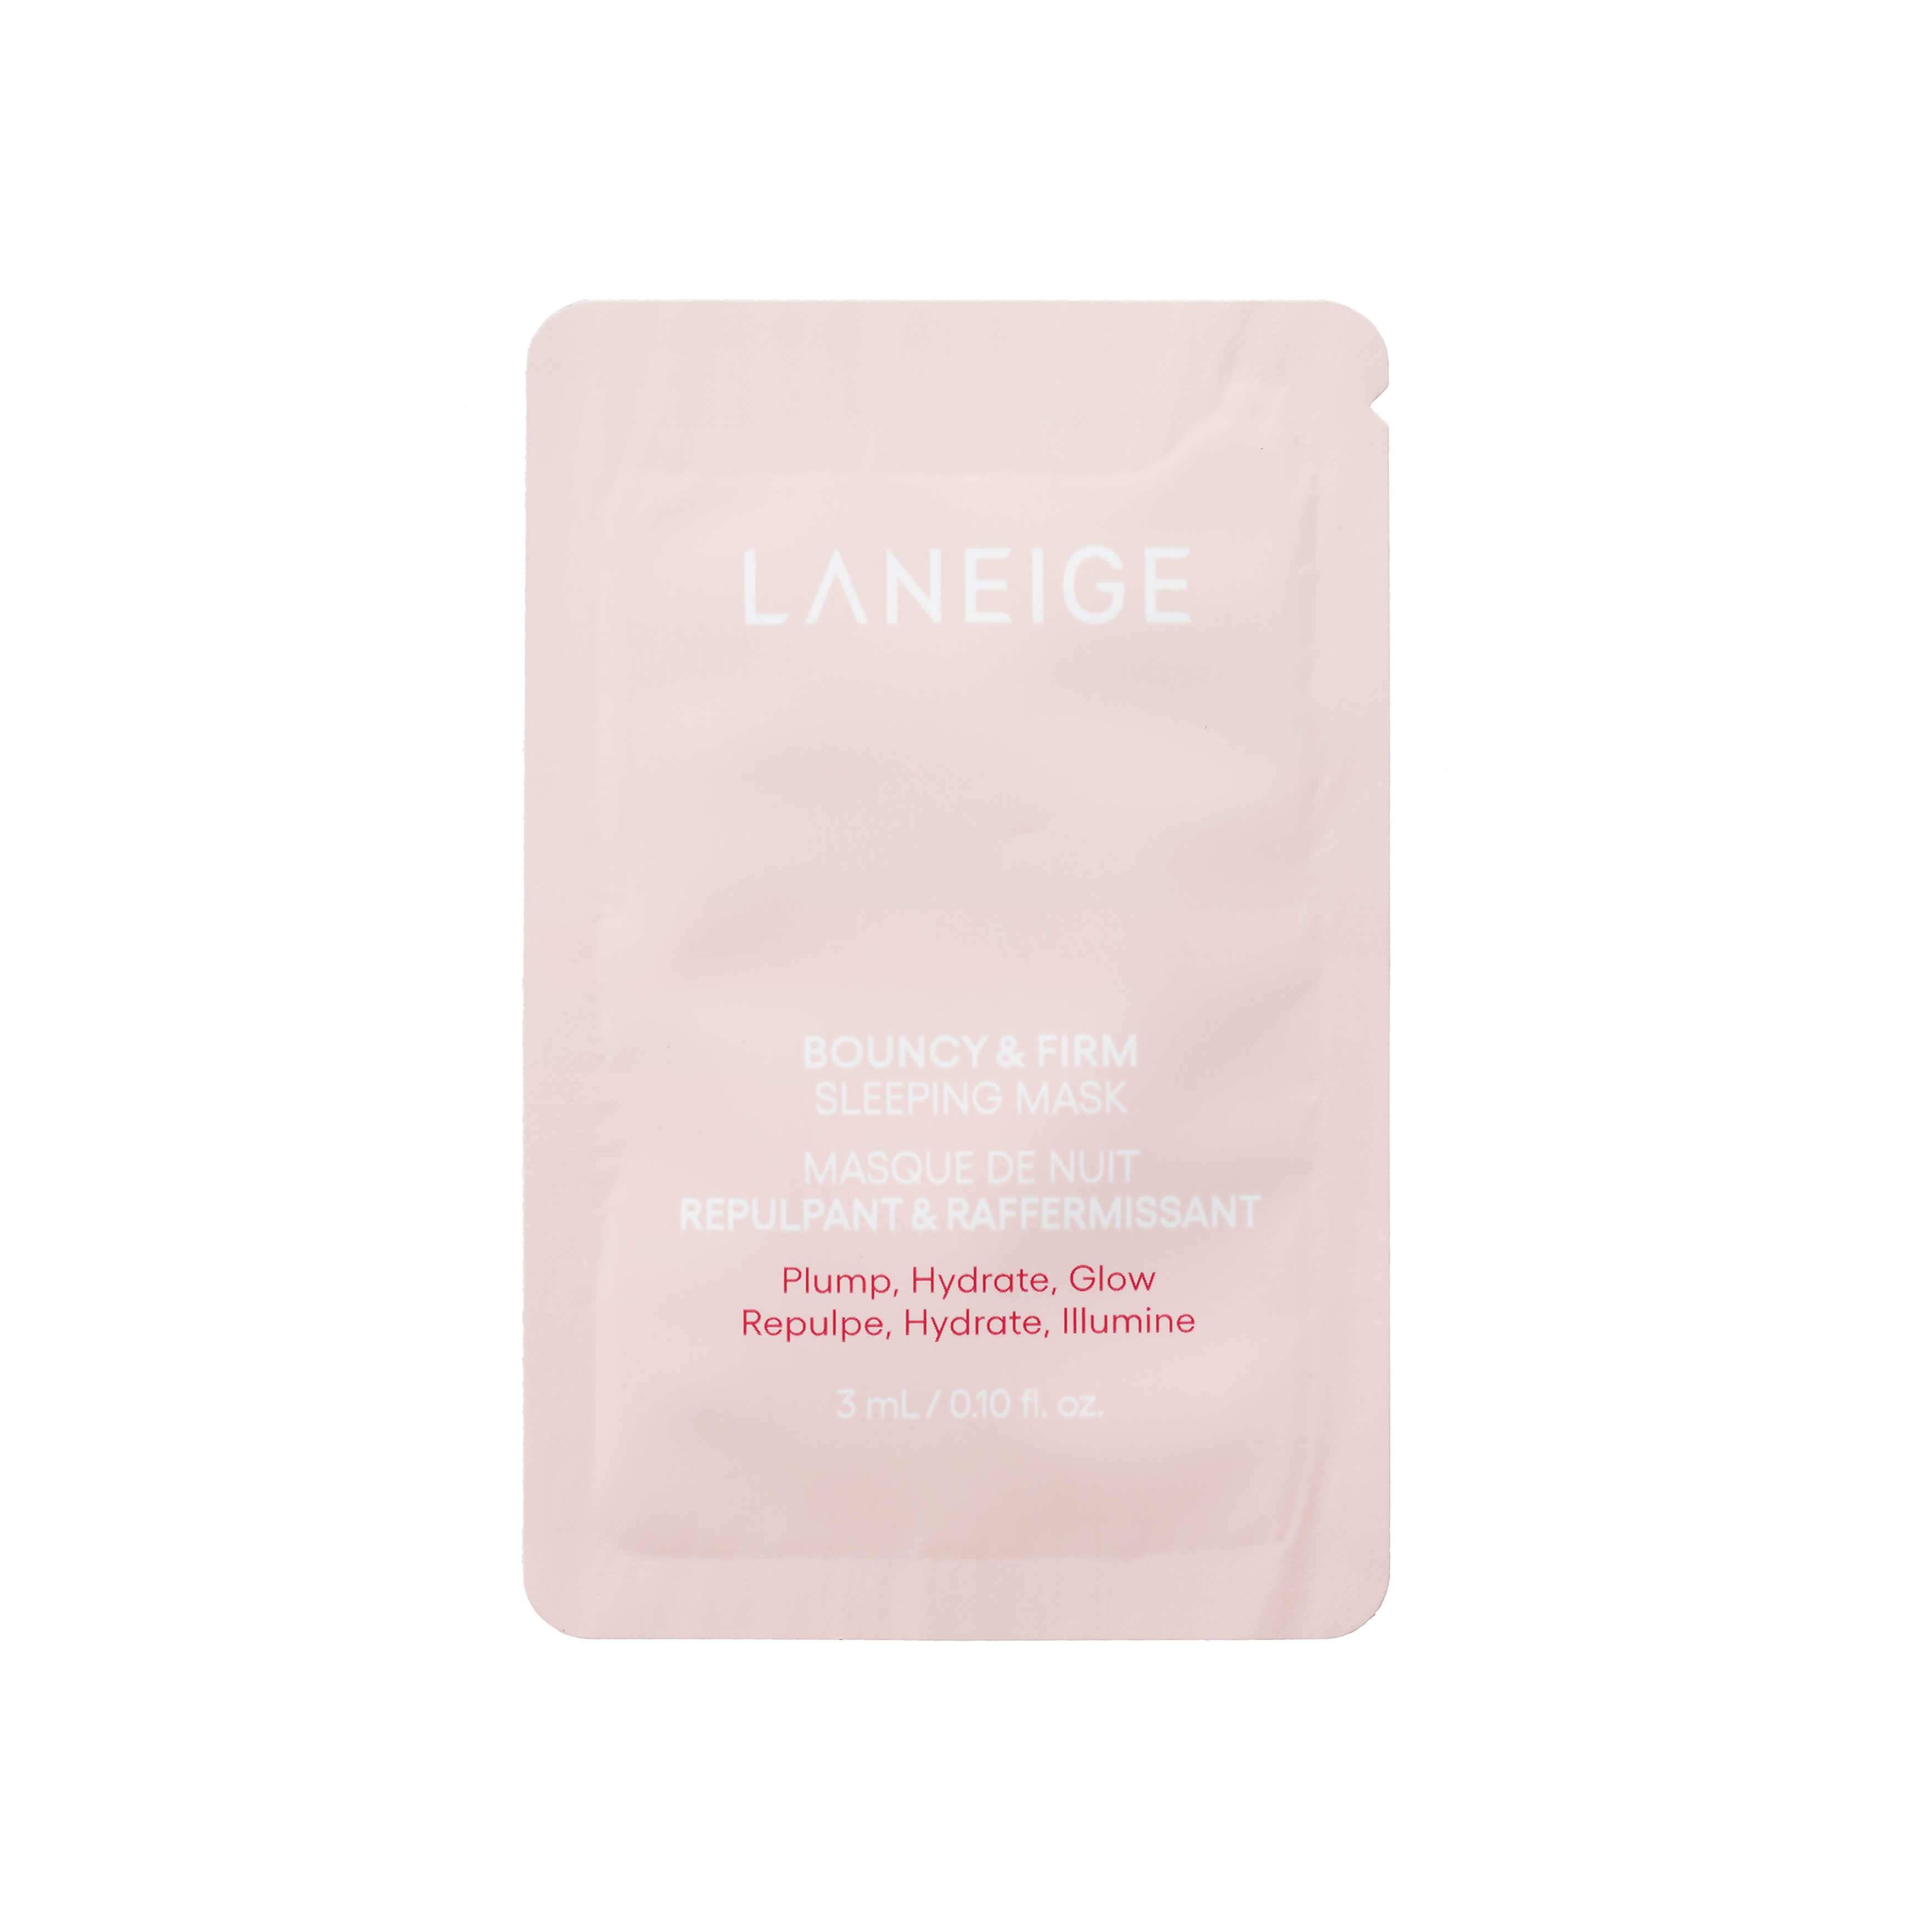 » Laneige Bouncy & Firm Sleeping Mask 3ml (100% off)